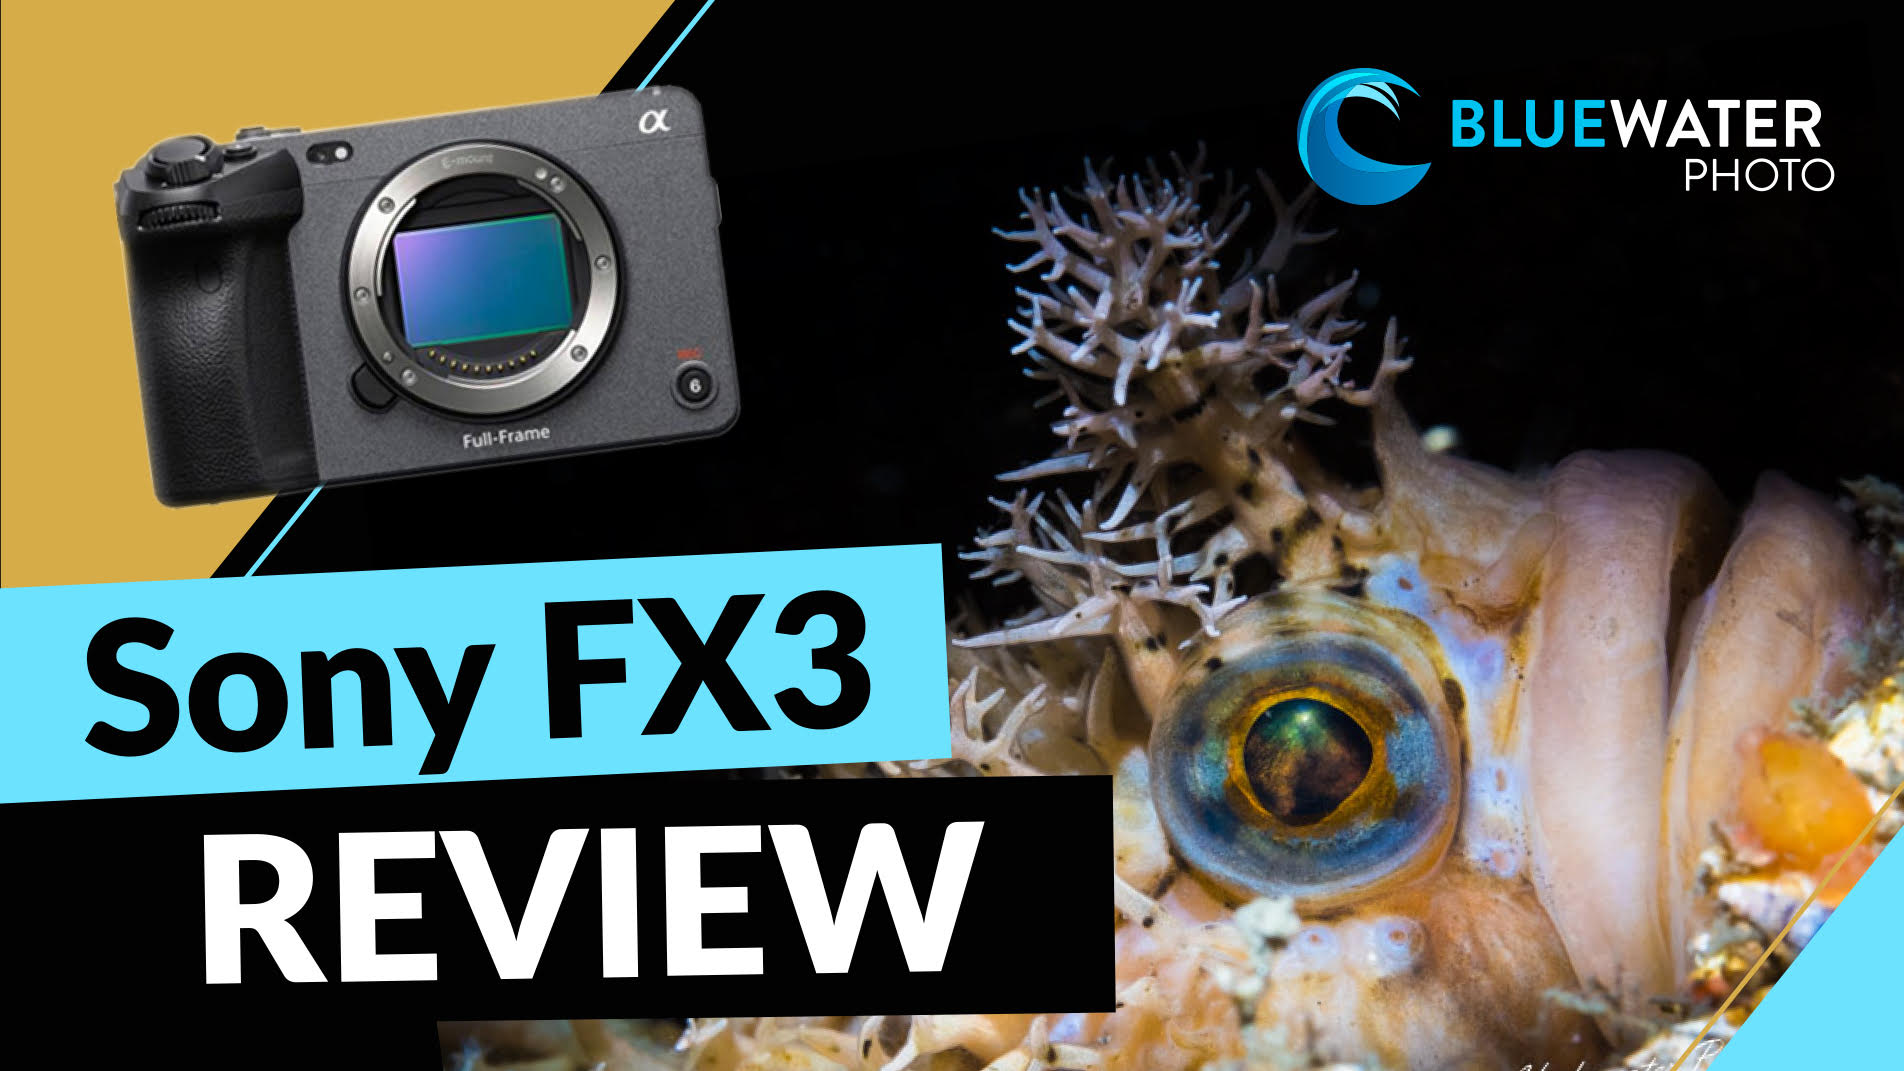 Sony FX3 Underwater Review